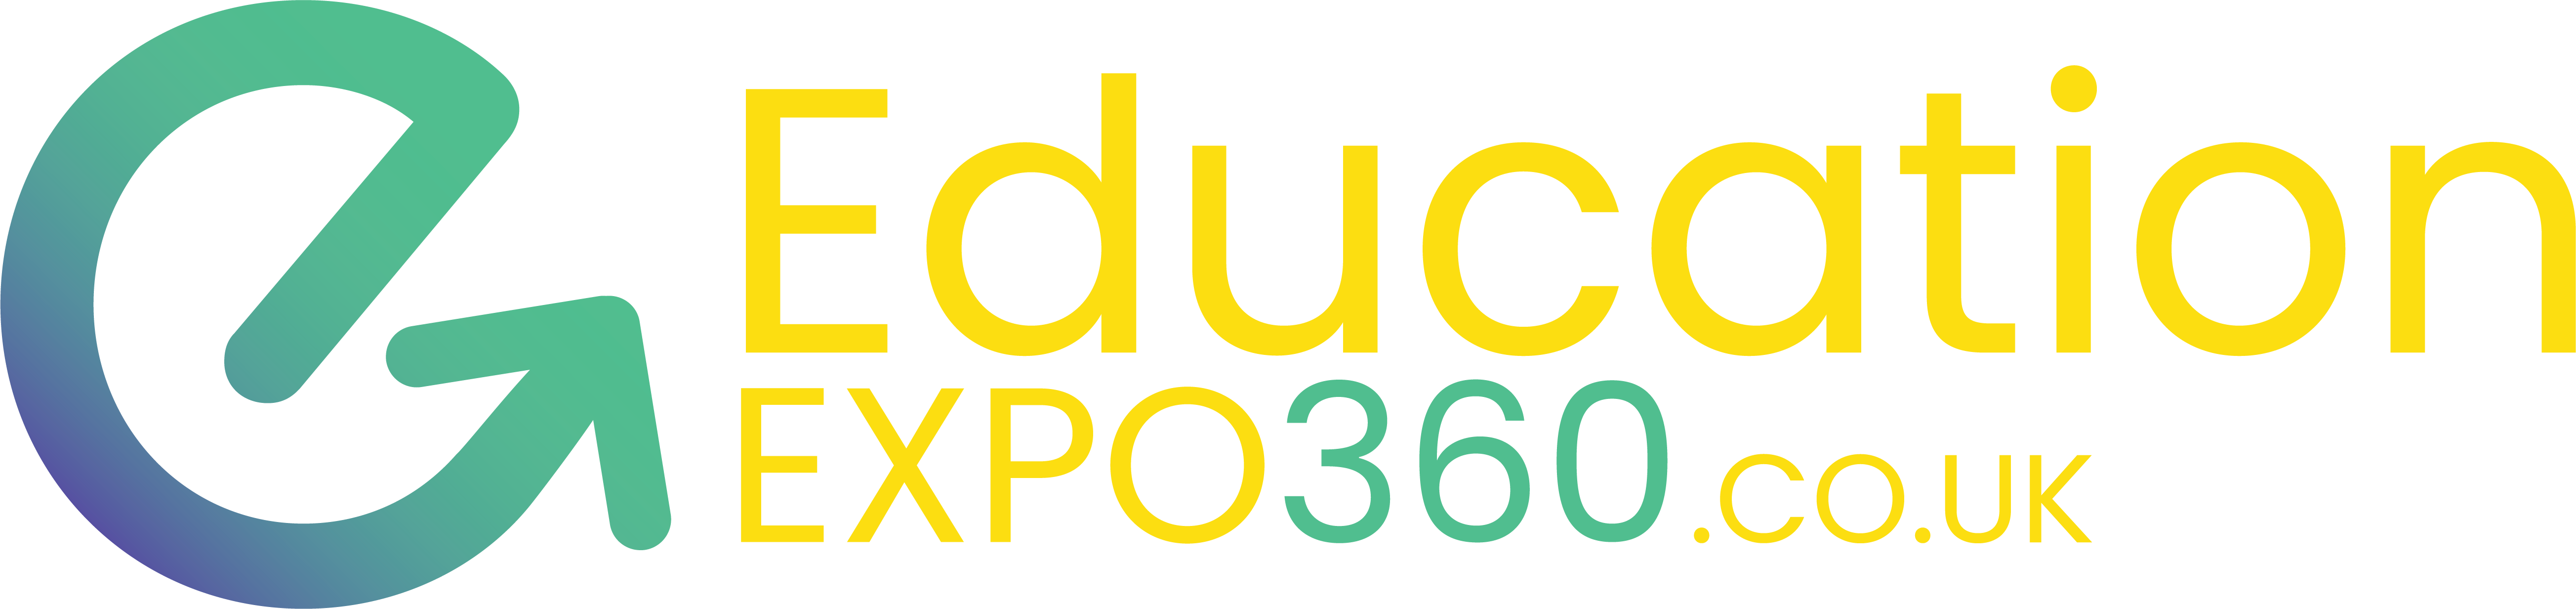 EducationExpo360 - UK